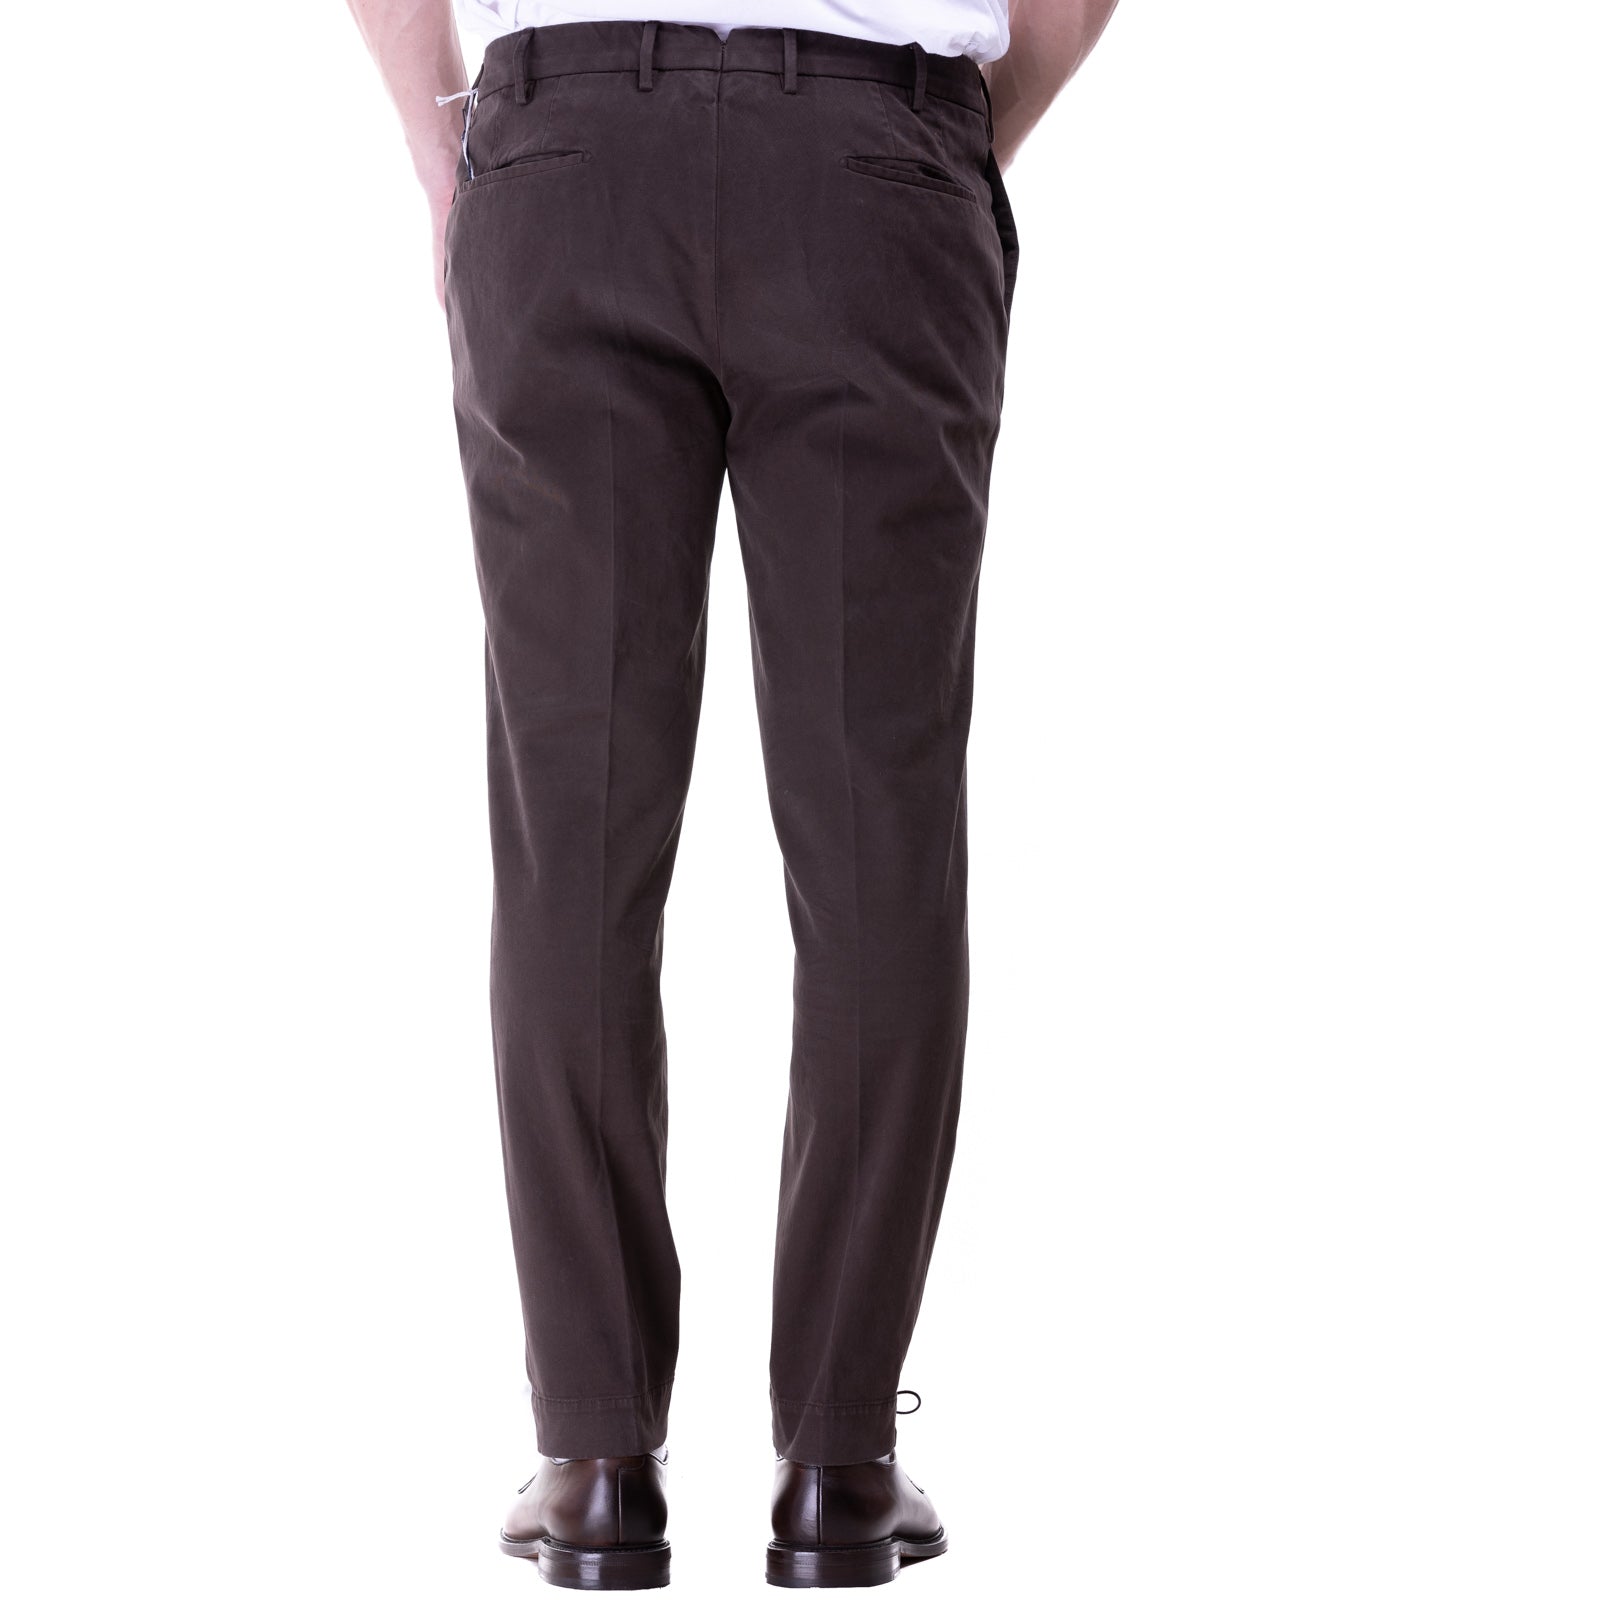 Pantalone
UOMO - Avant-gardeandria